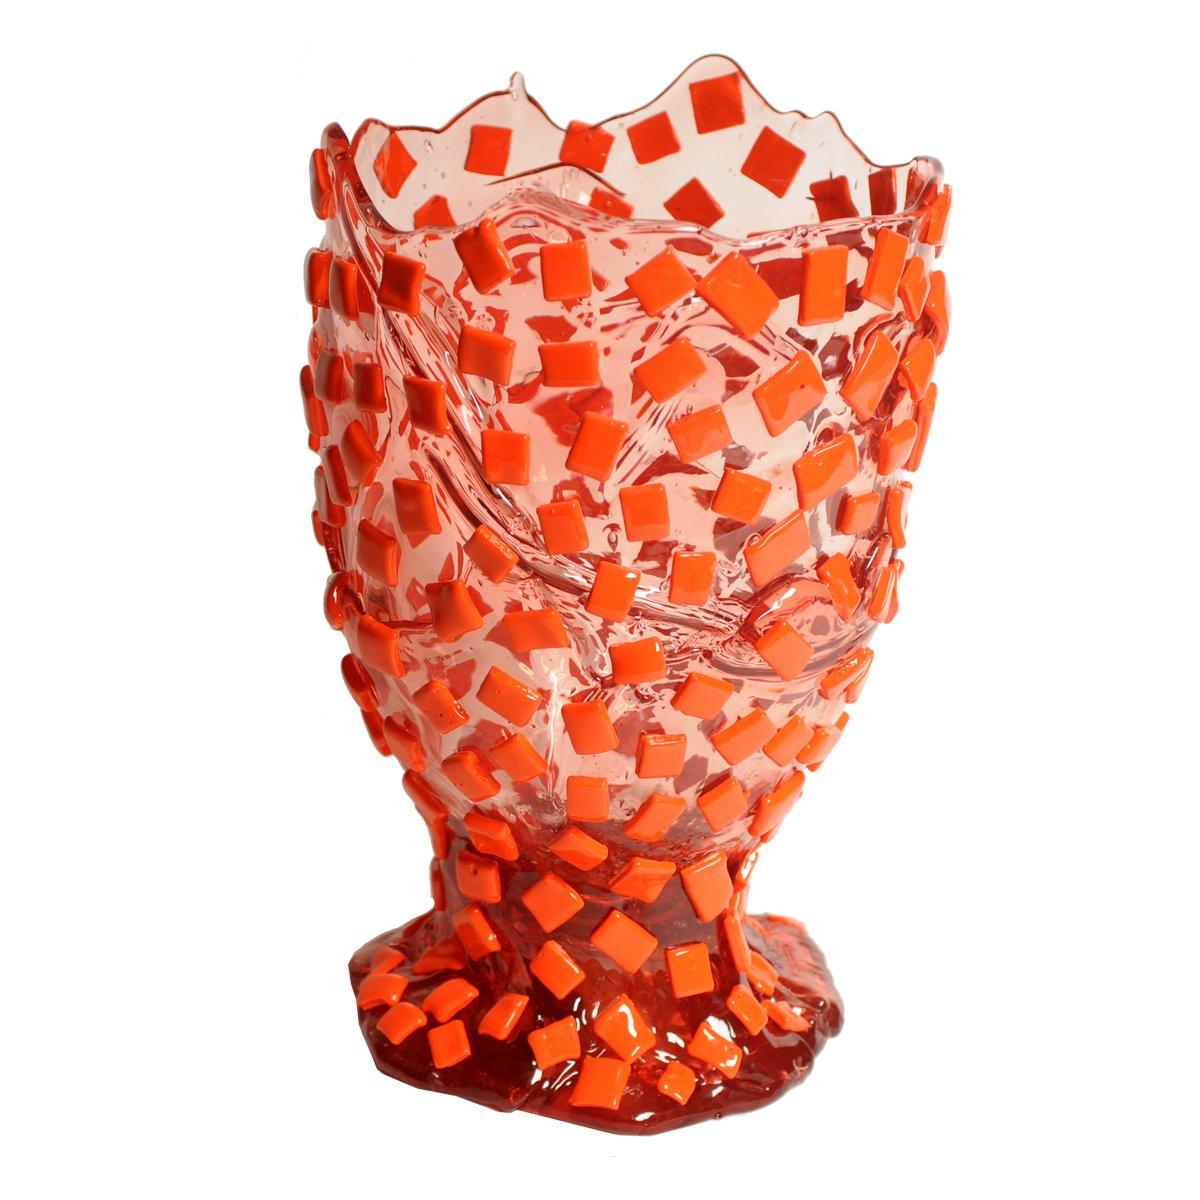 Rock Vase - Clear Antique Pink and Matt Orange

Vase in soft resin designed by Gaetano Pesce in 1995 for Fish Design collection.

Measures: M - ø 16cm x H 26cm

Dimensions Available:
S - ø 10.5cm x H 19cm
M - ø 16cm x H 26cm
L - ø 22cm x H